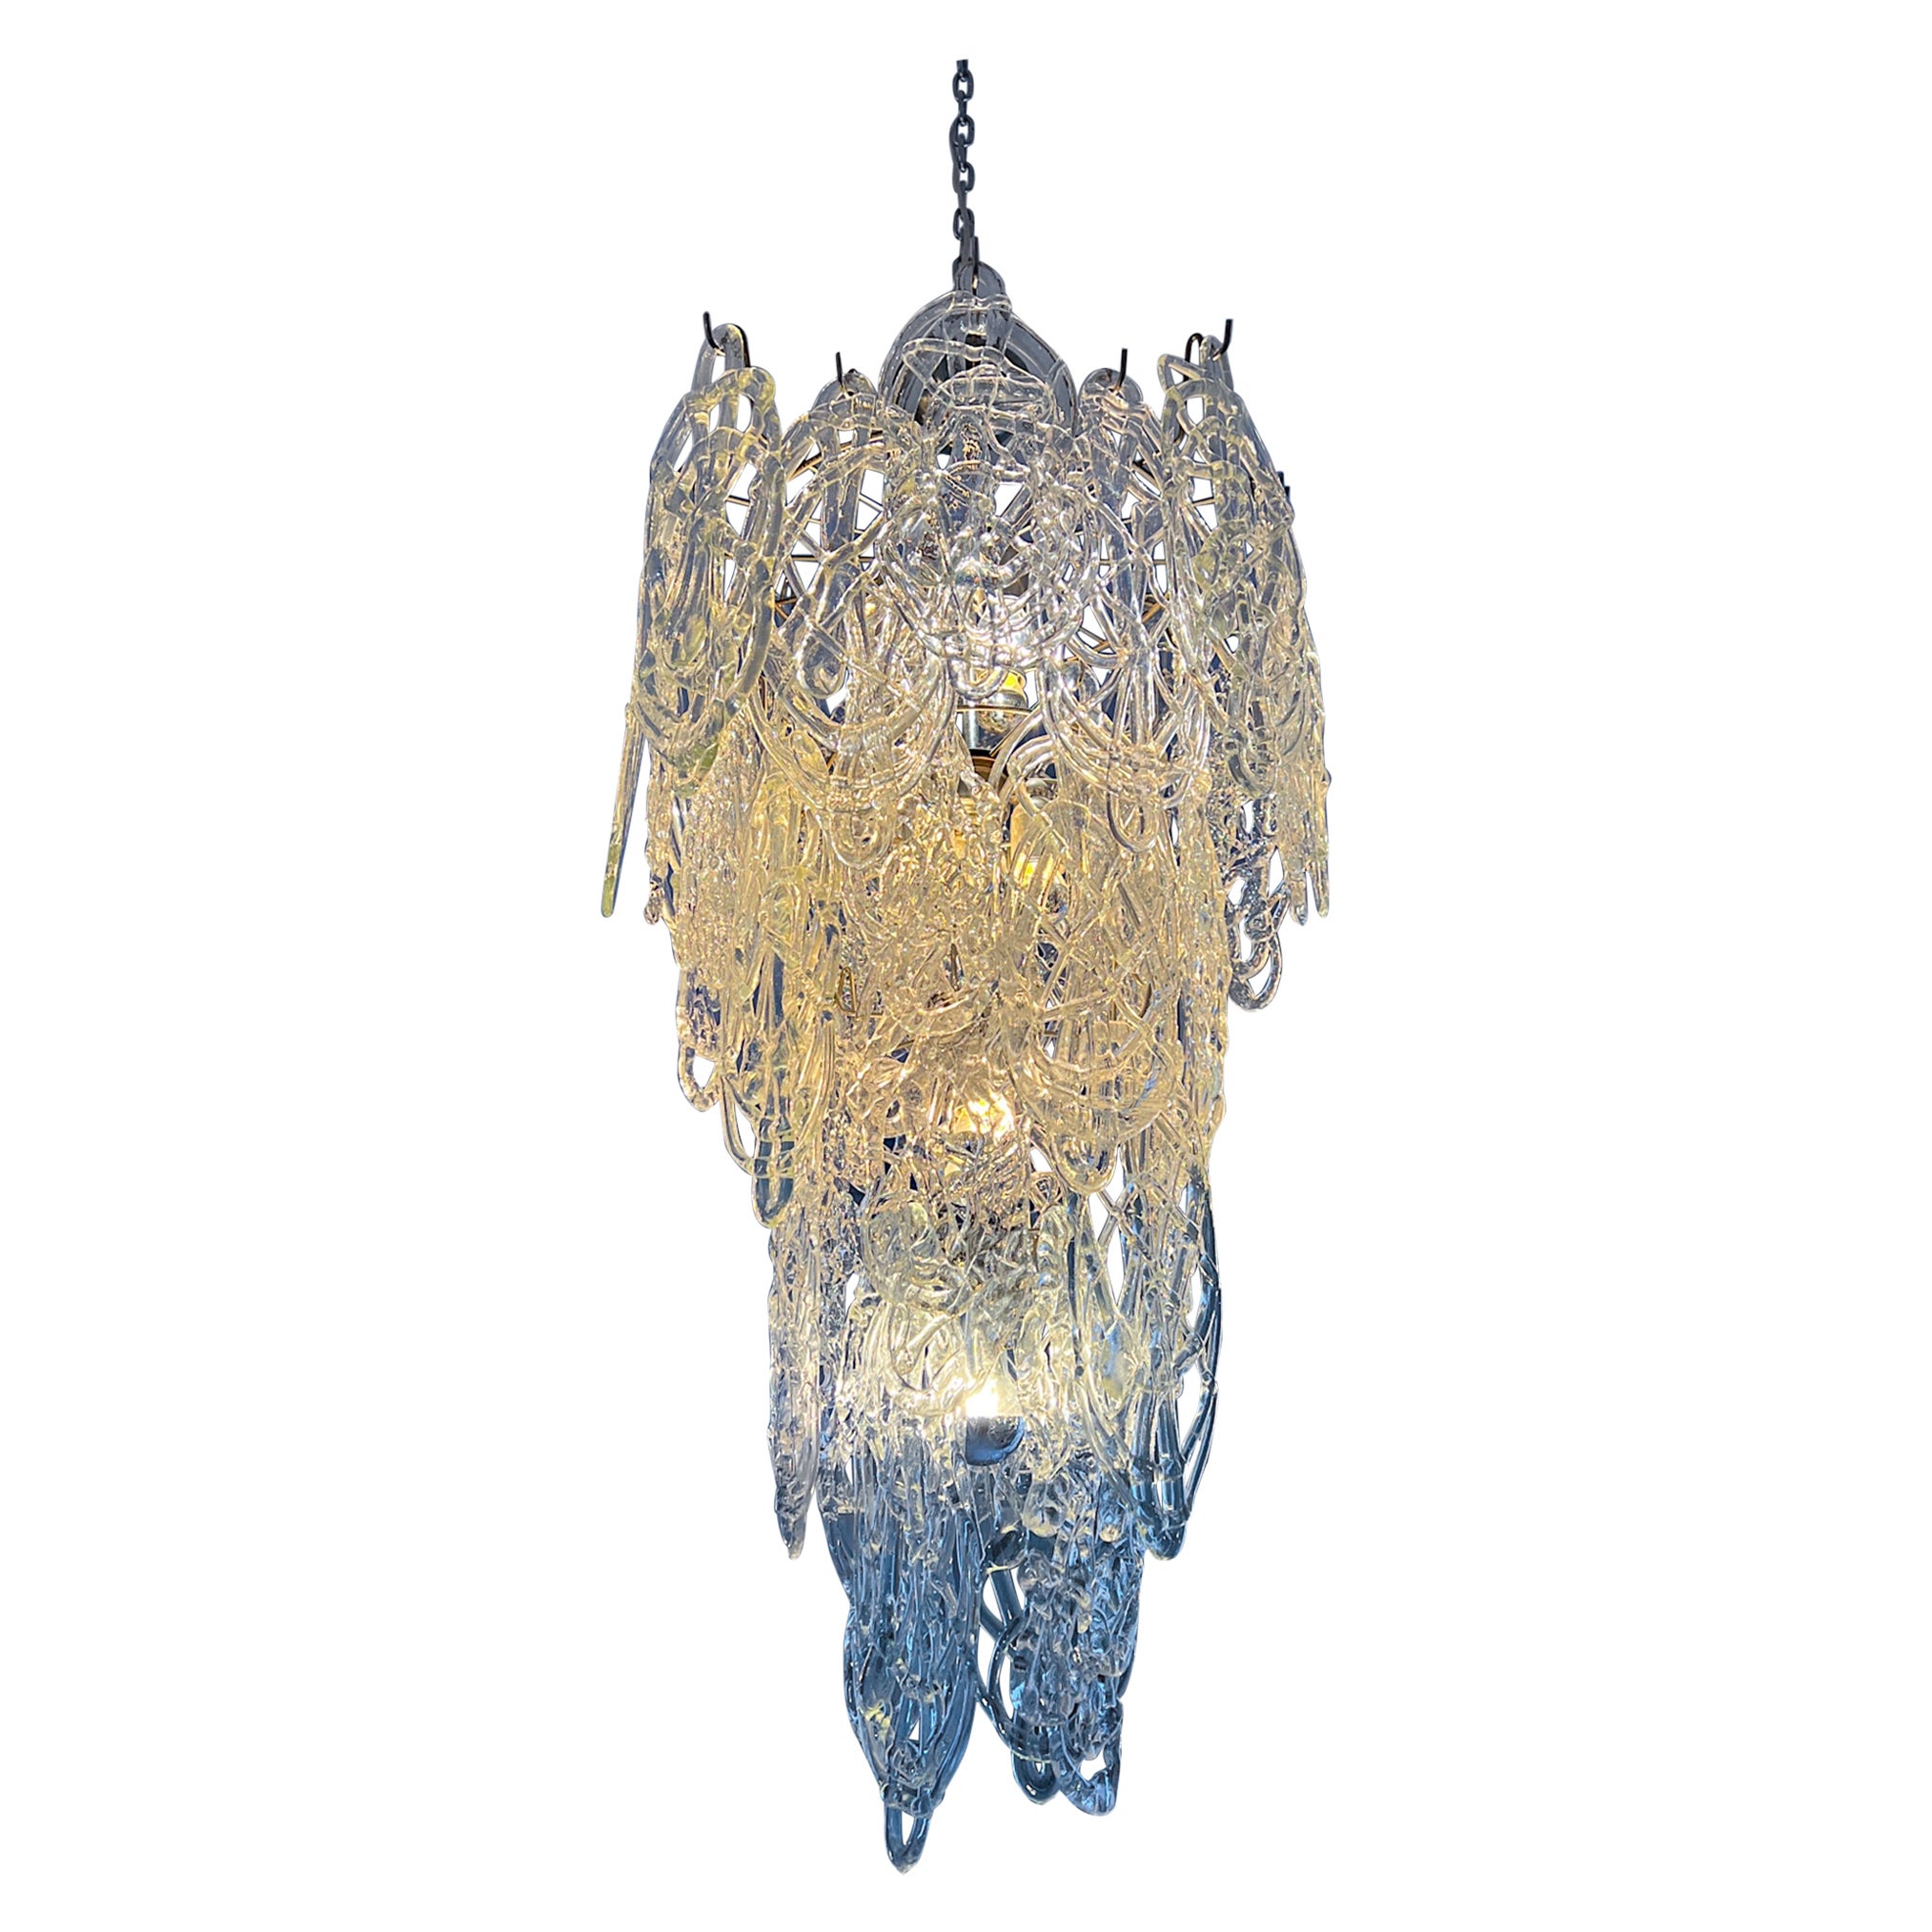 1960s Large Murano glass chandelier in model "Ragnatela" by mazzega For Sale